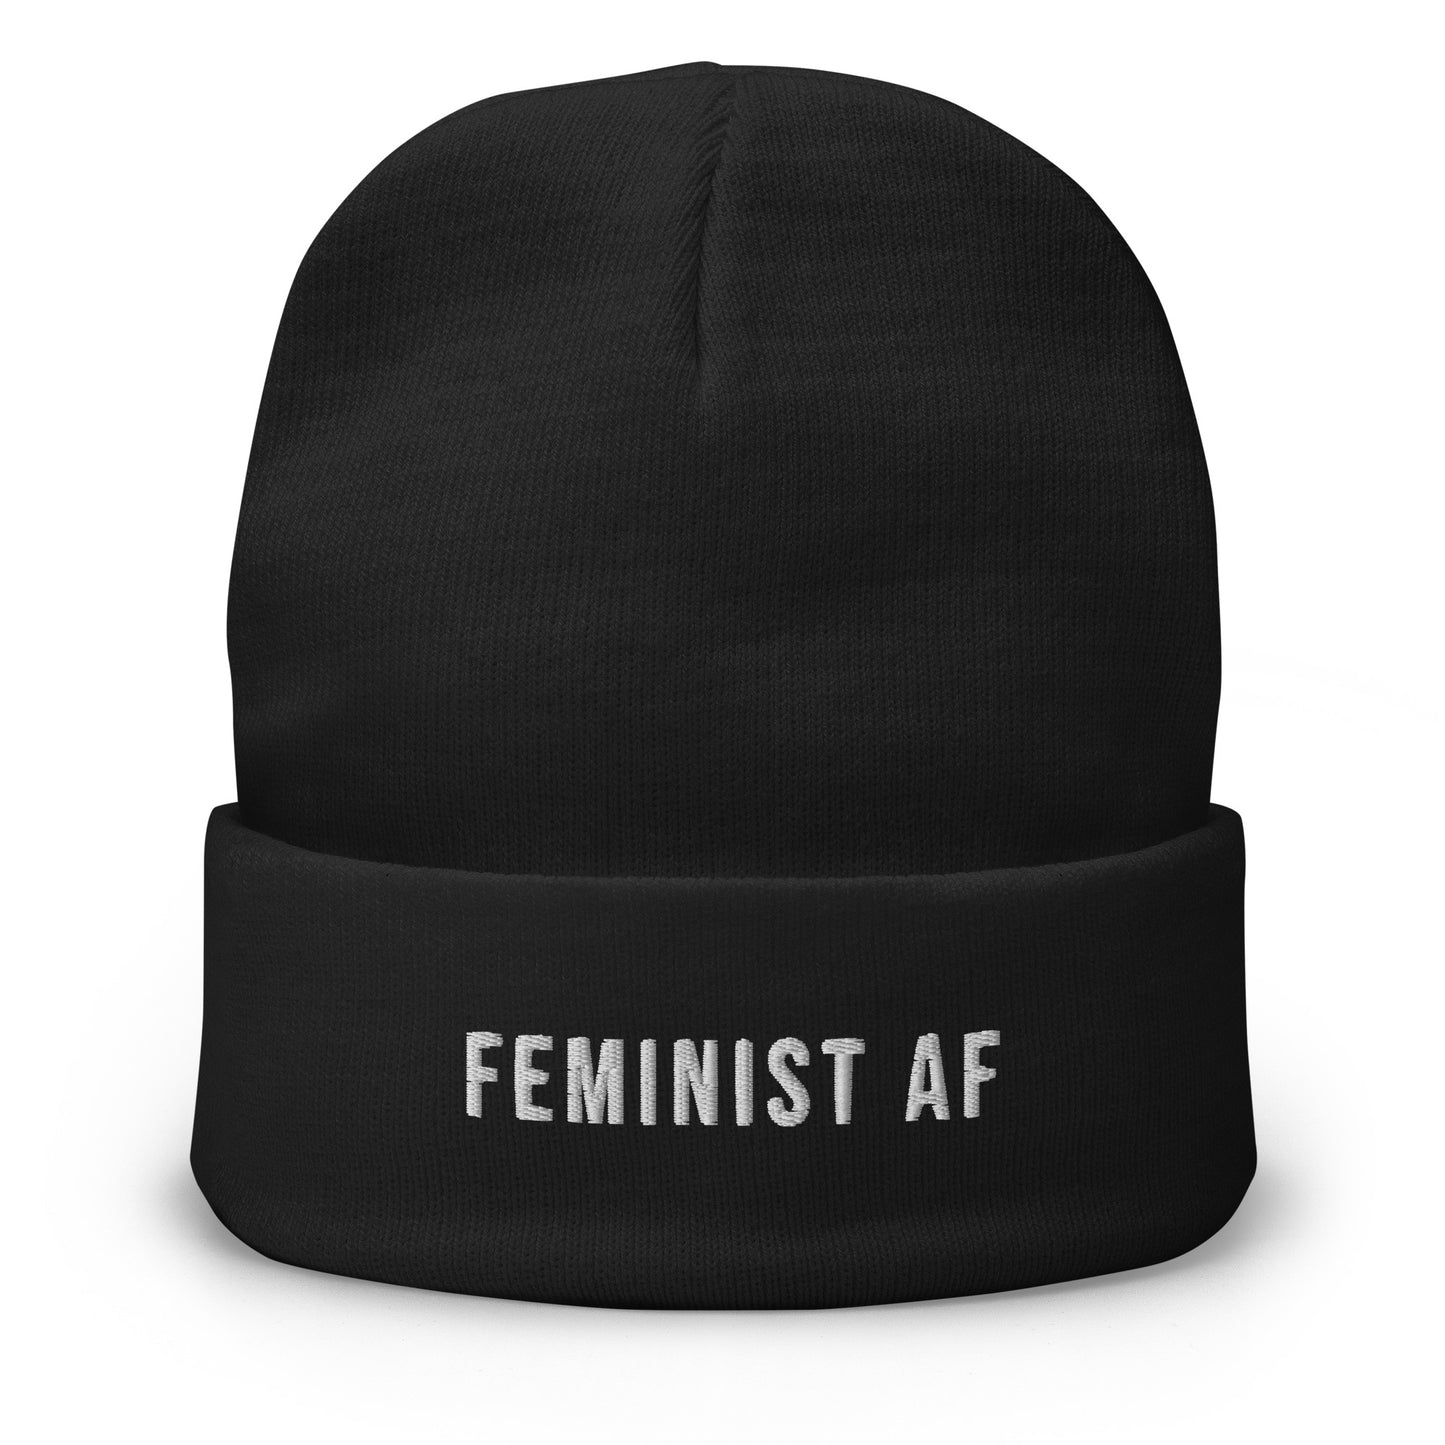 Feminist AF beanie